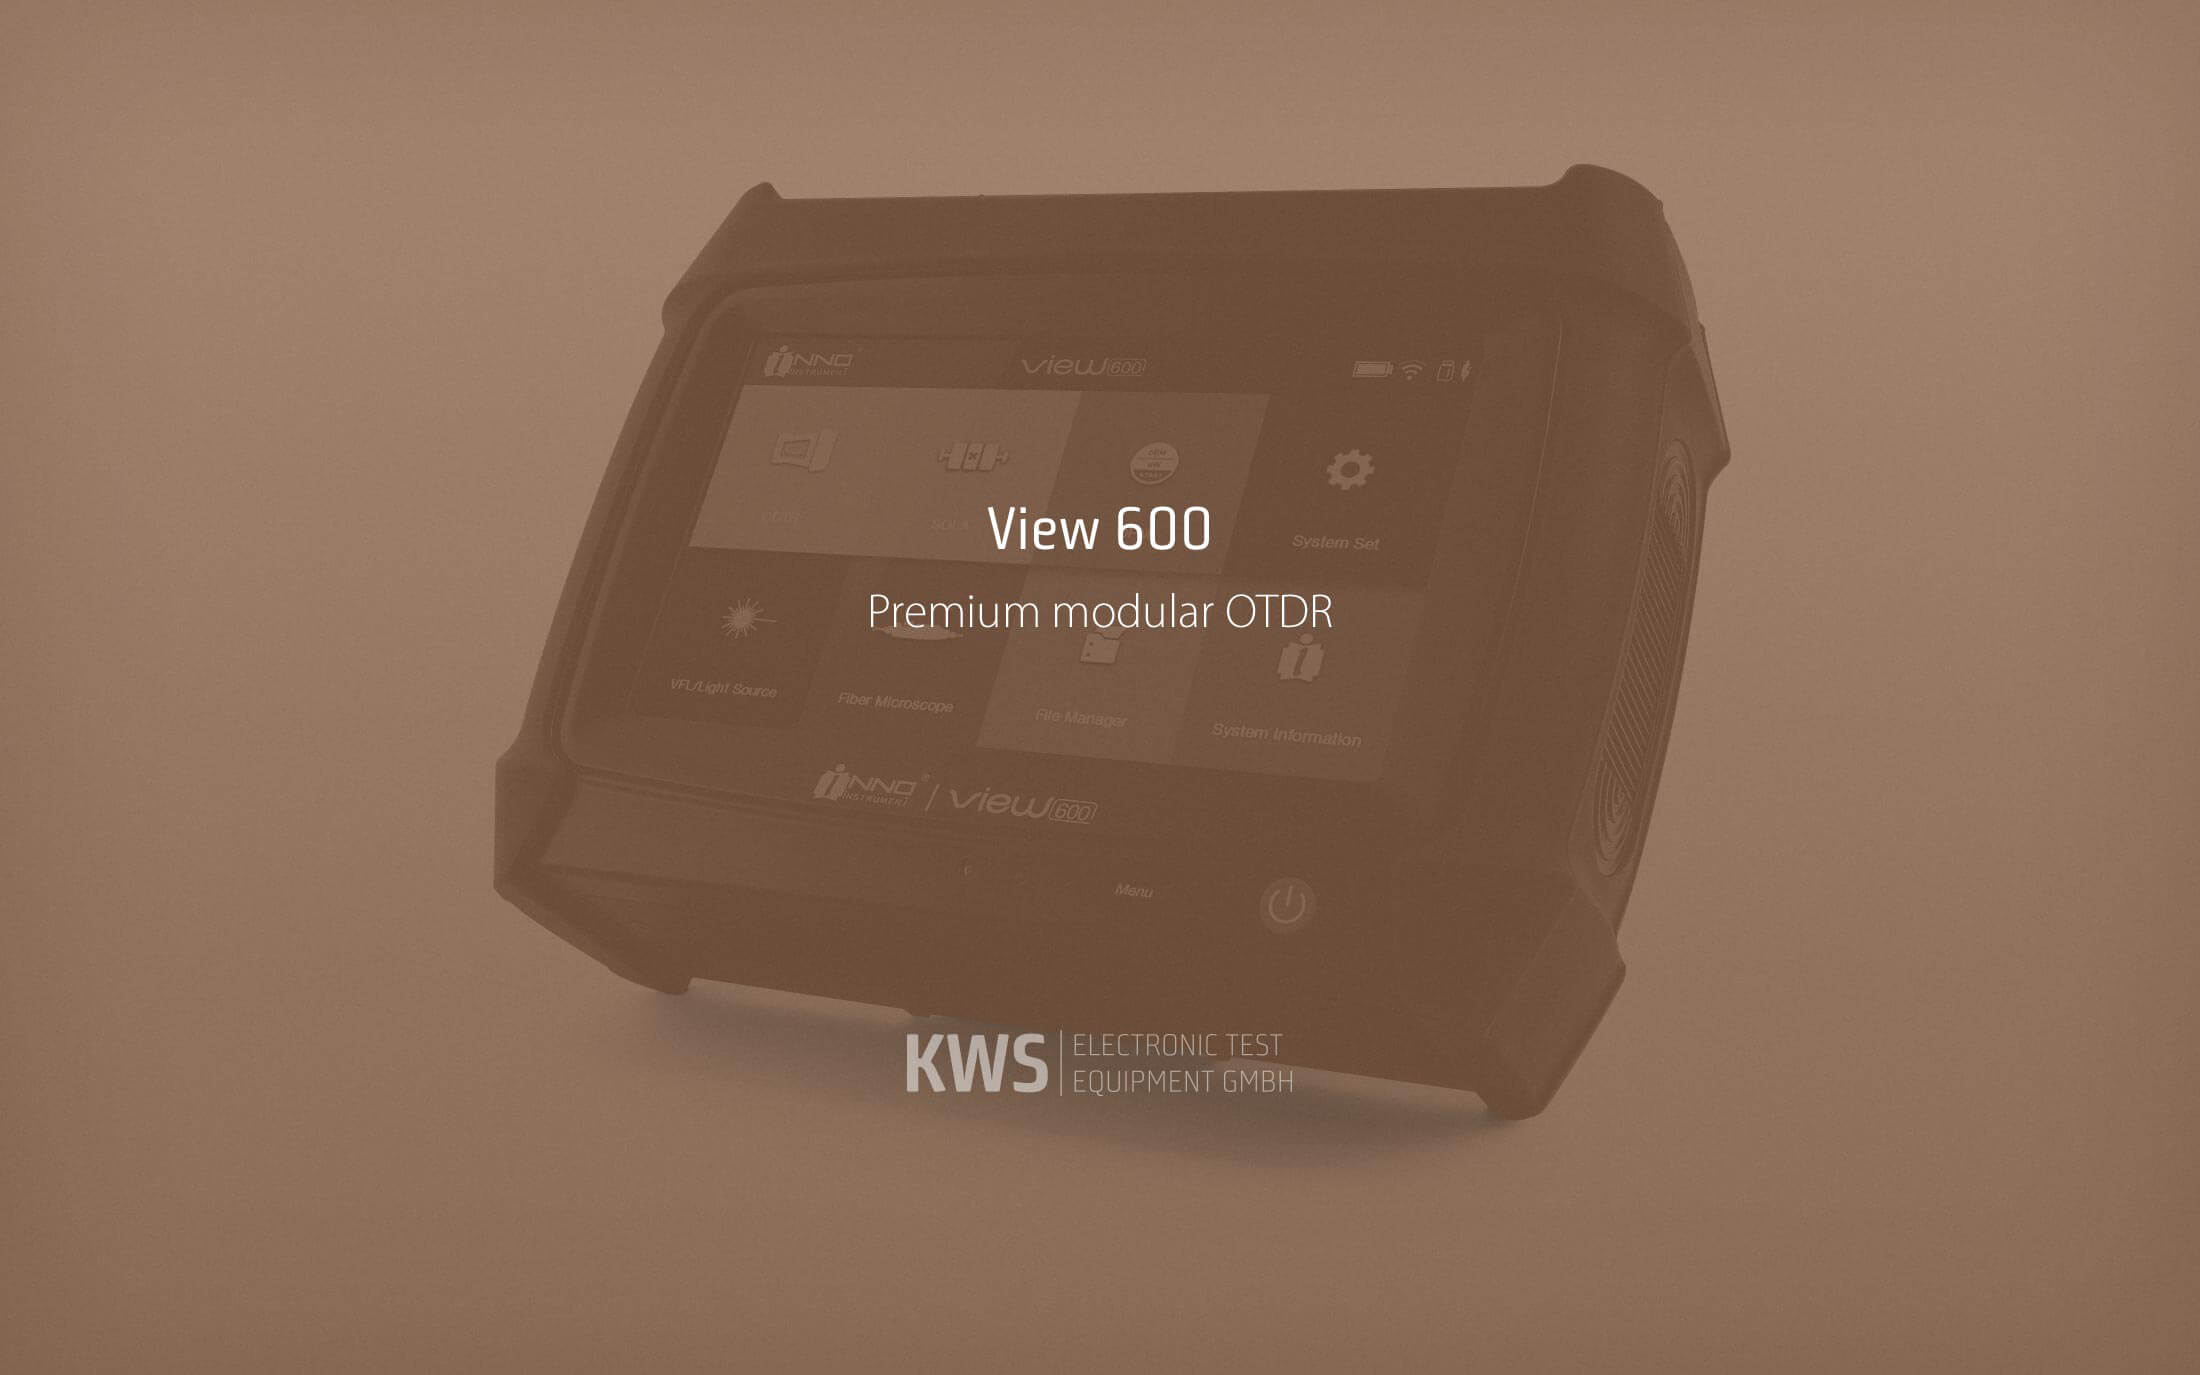 KWS Electronic News 2020: View 600 premium modular OTDR